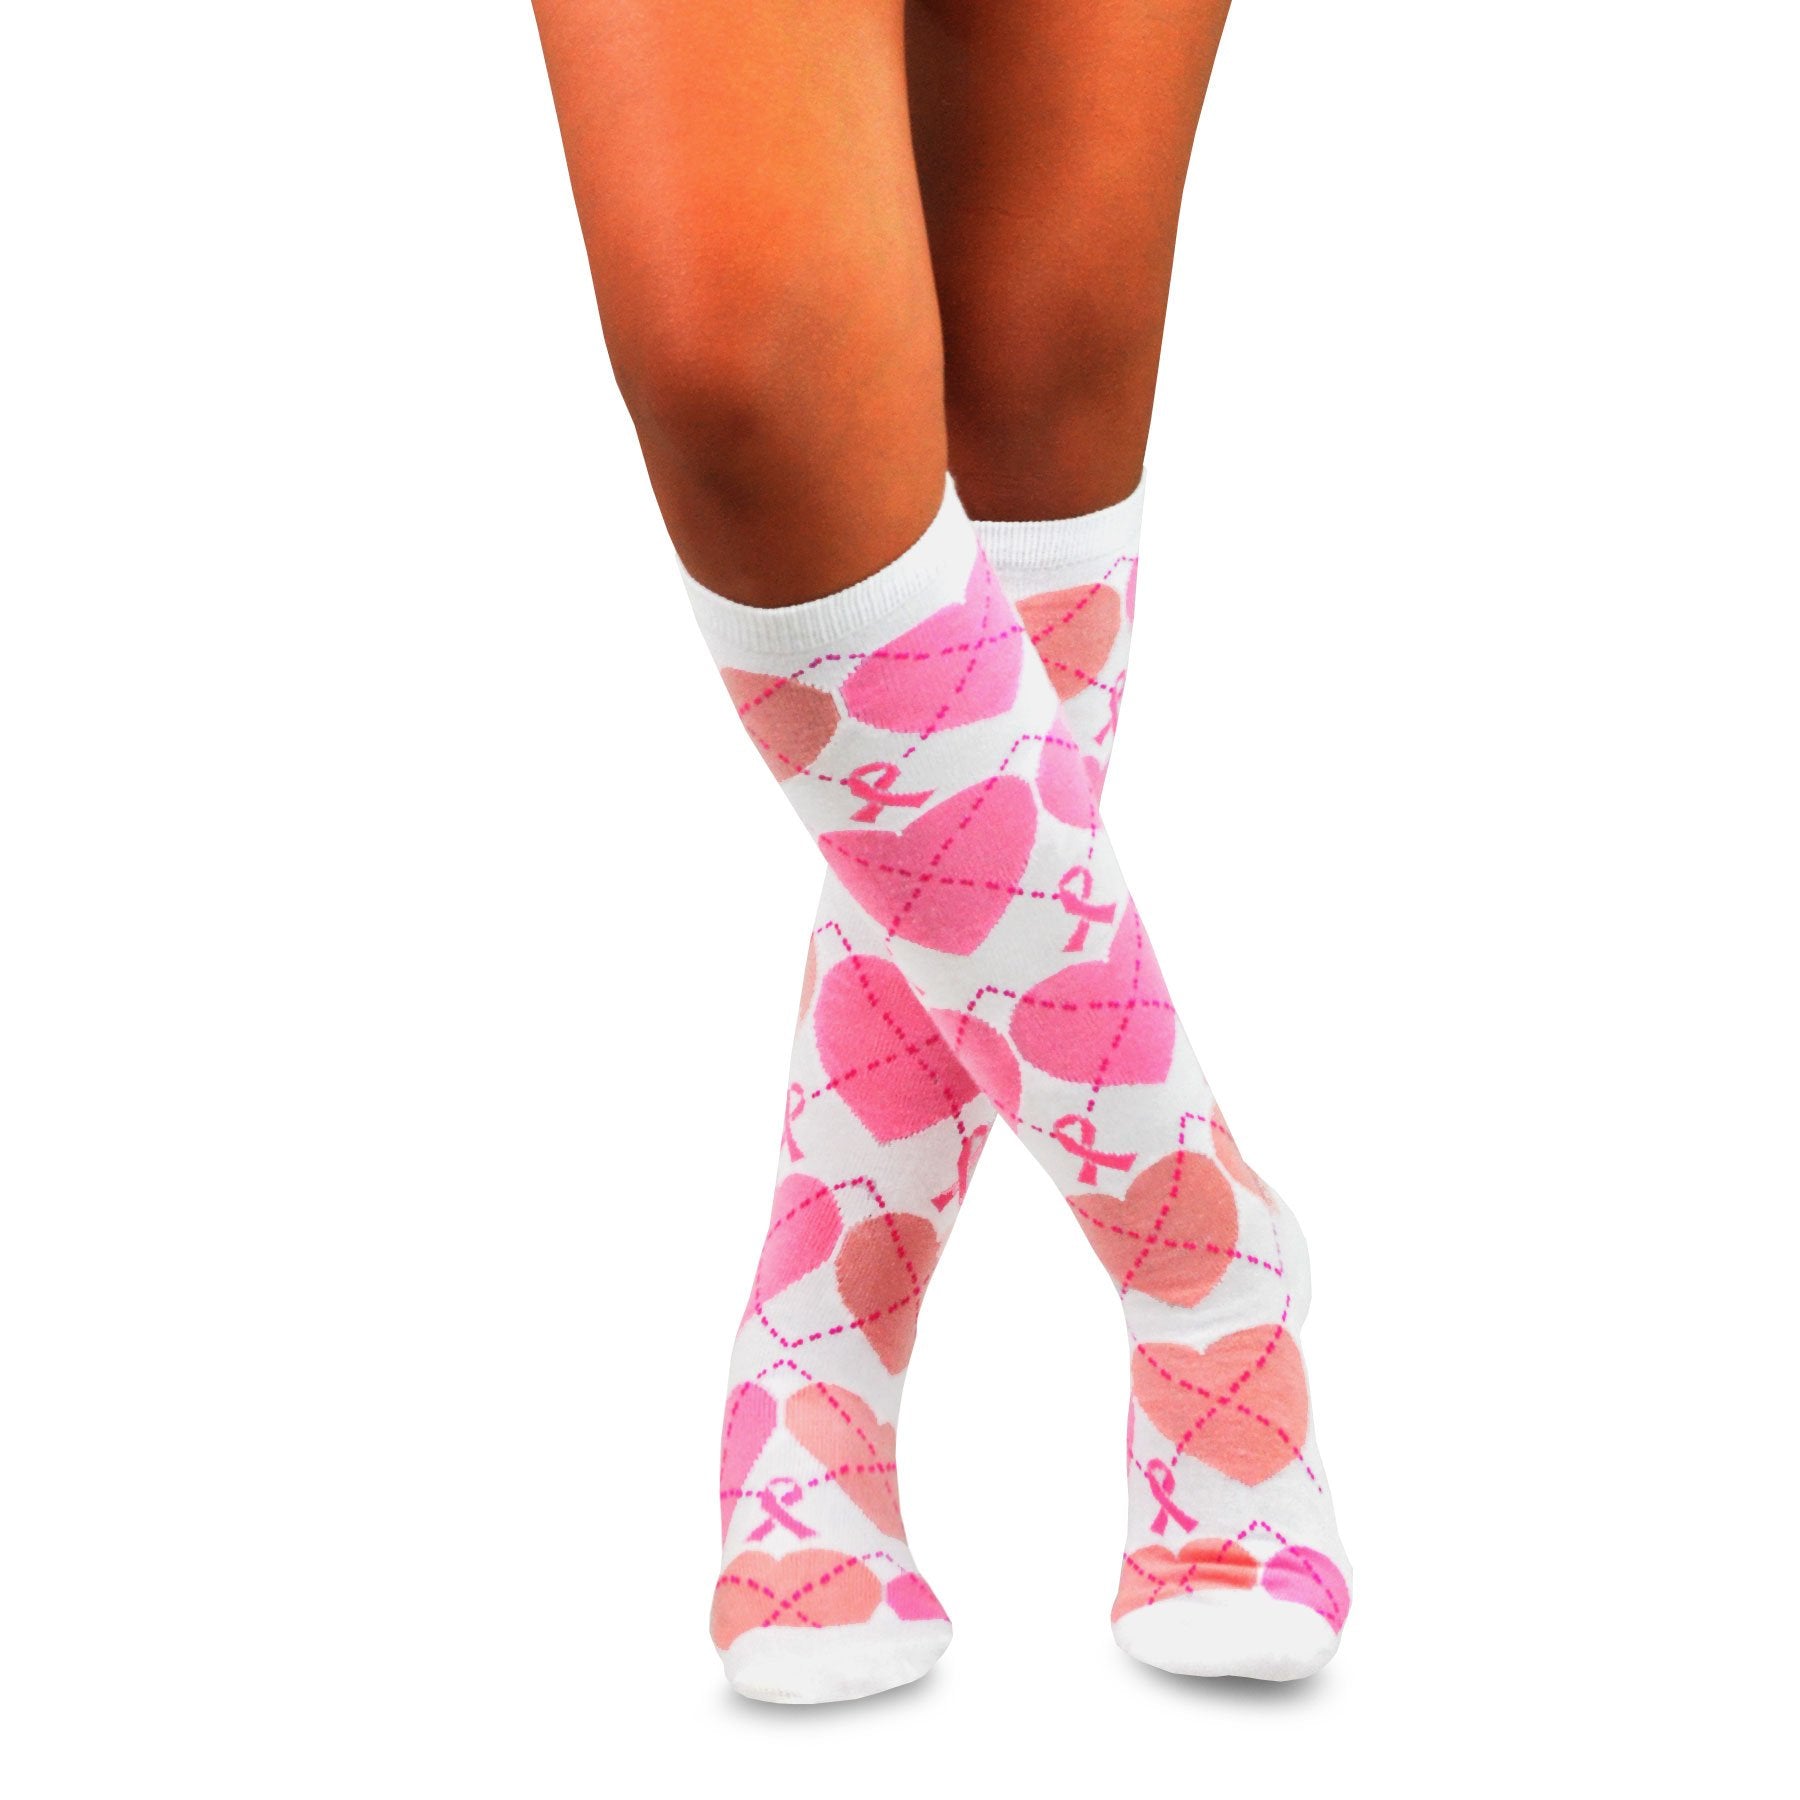 TeeHee Socks Women's Pink Ribbon Cotton Knee High Pink on White 3-Pack